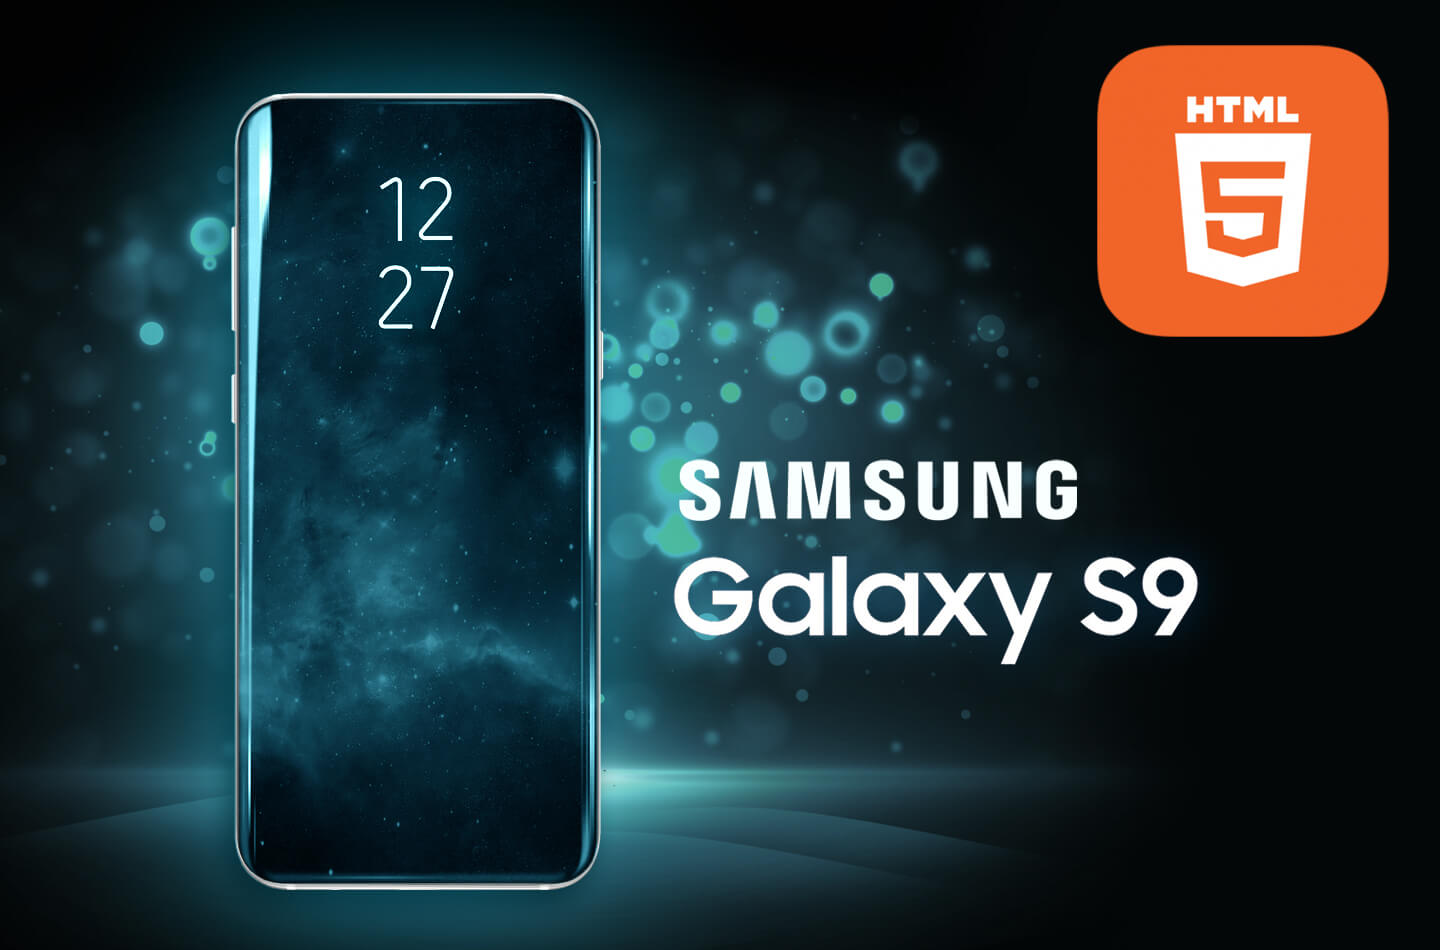 Samsung Galaxy S9 En Verschijnen In Html5 Test